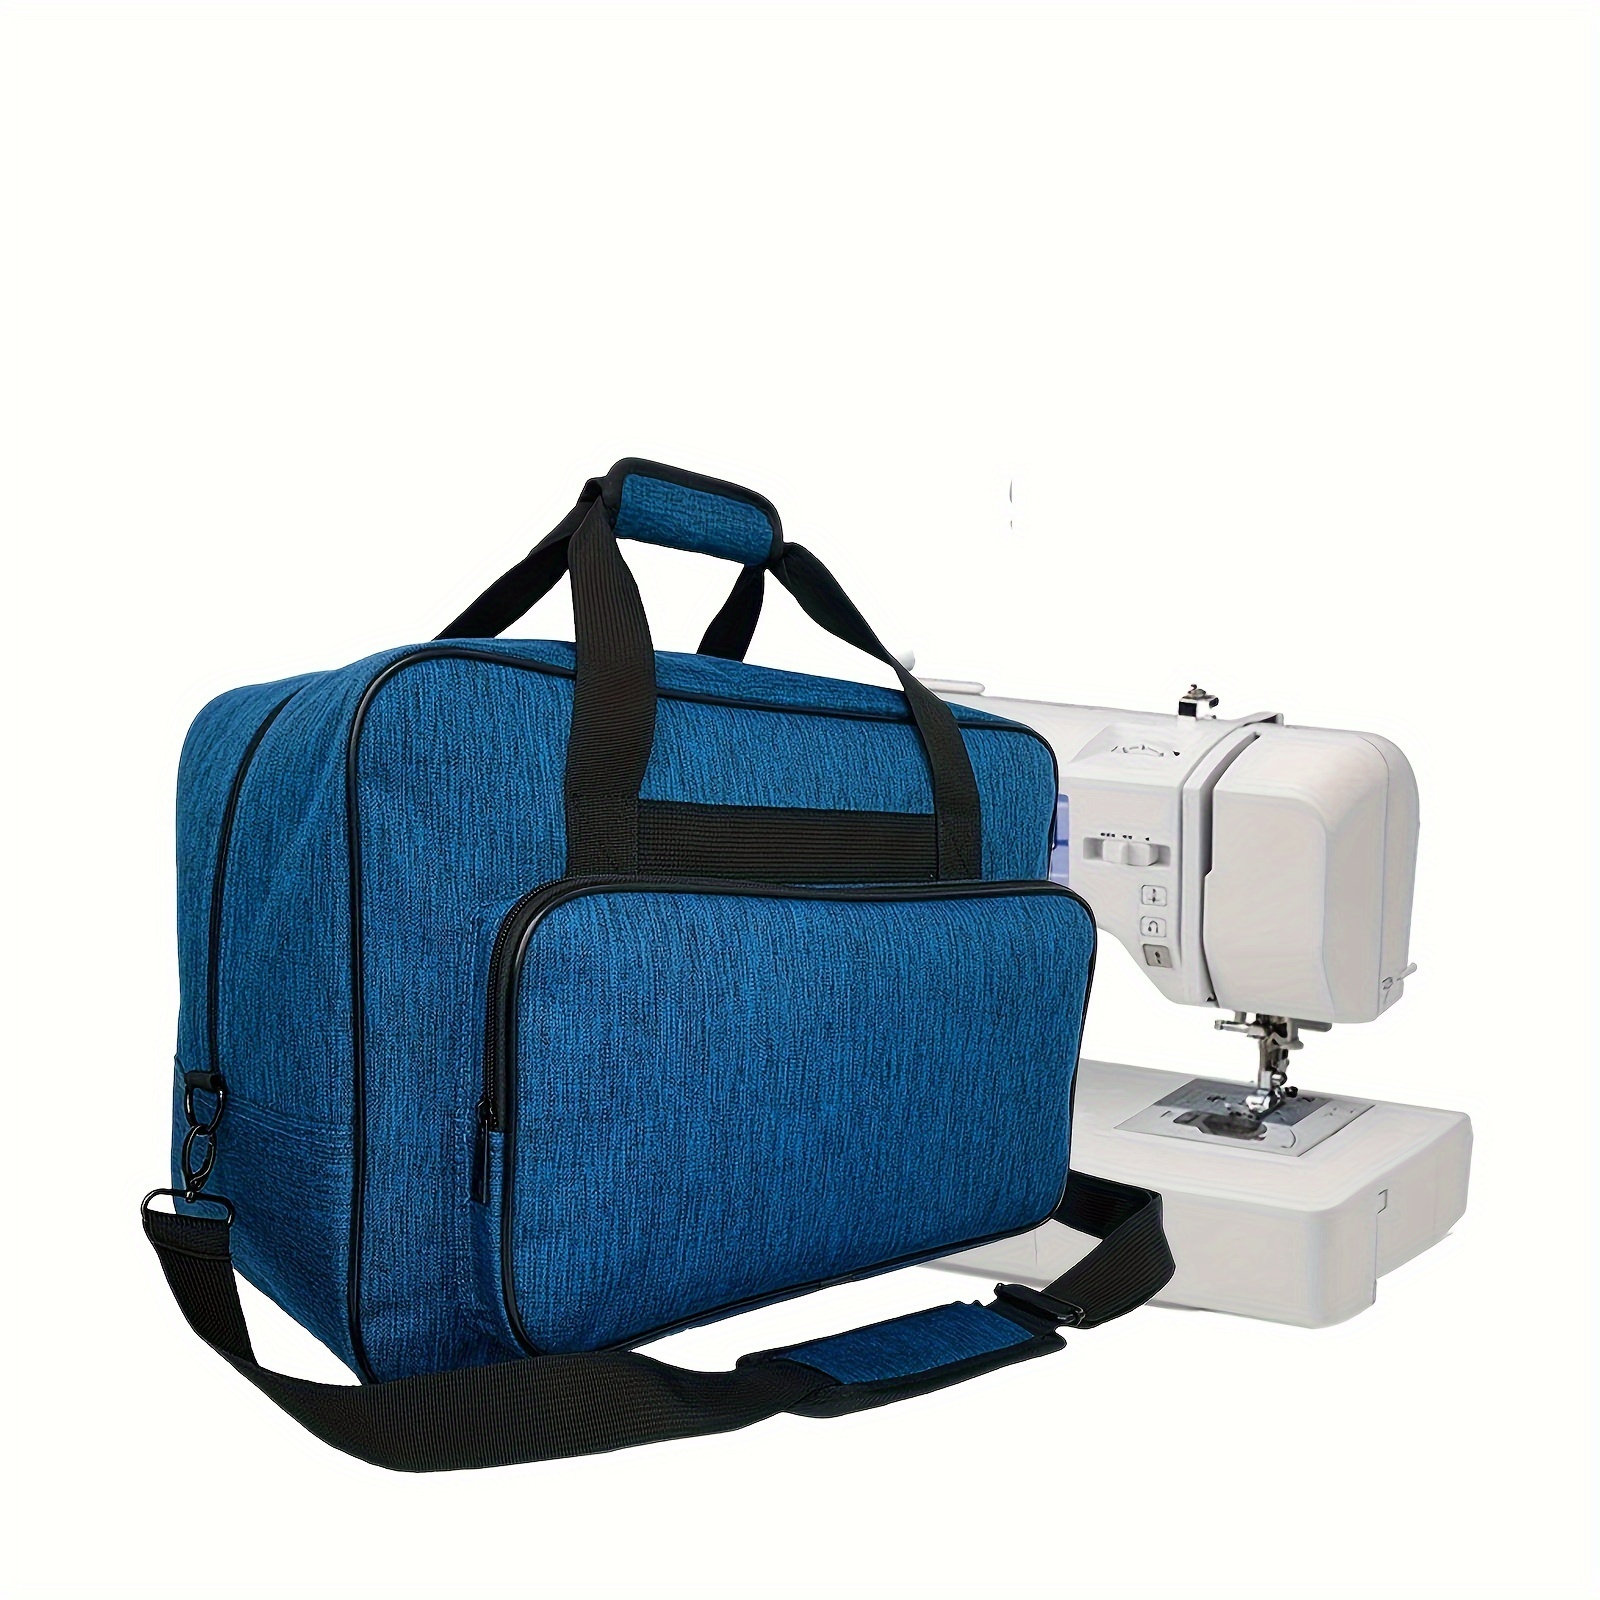 Bolsa para máquina de coser duradera, almohadilla acolchada, bolsillos  ligeros de nailon, bolso de m Zulema Transporte de la máquina de coser